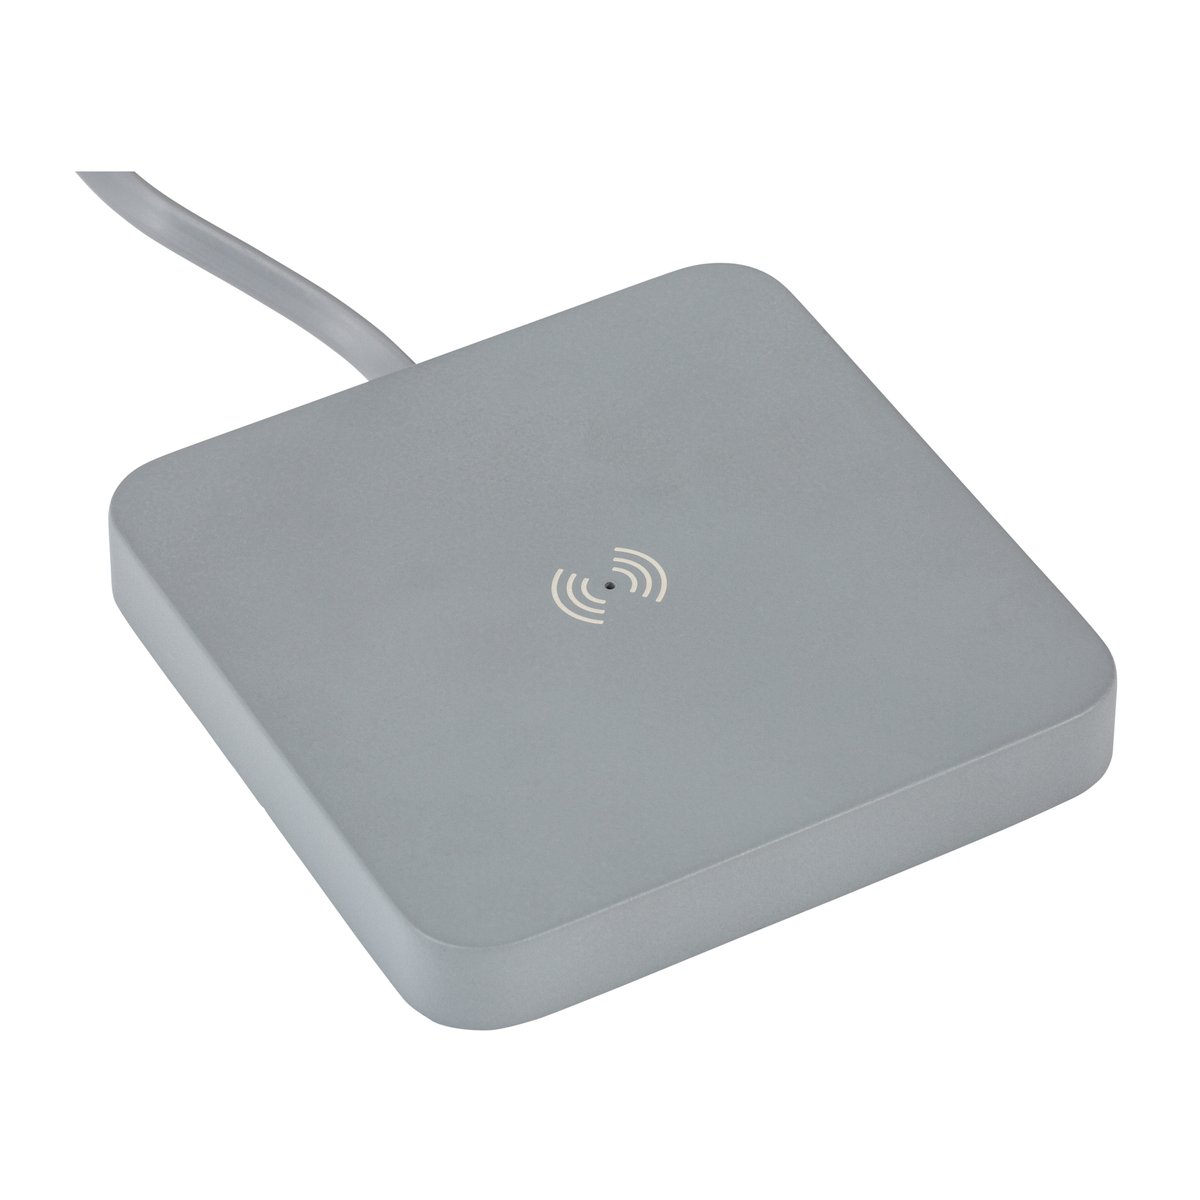 Wireless Charger REEVES-HARTFORD grey 5 Watt